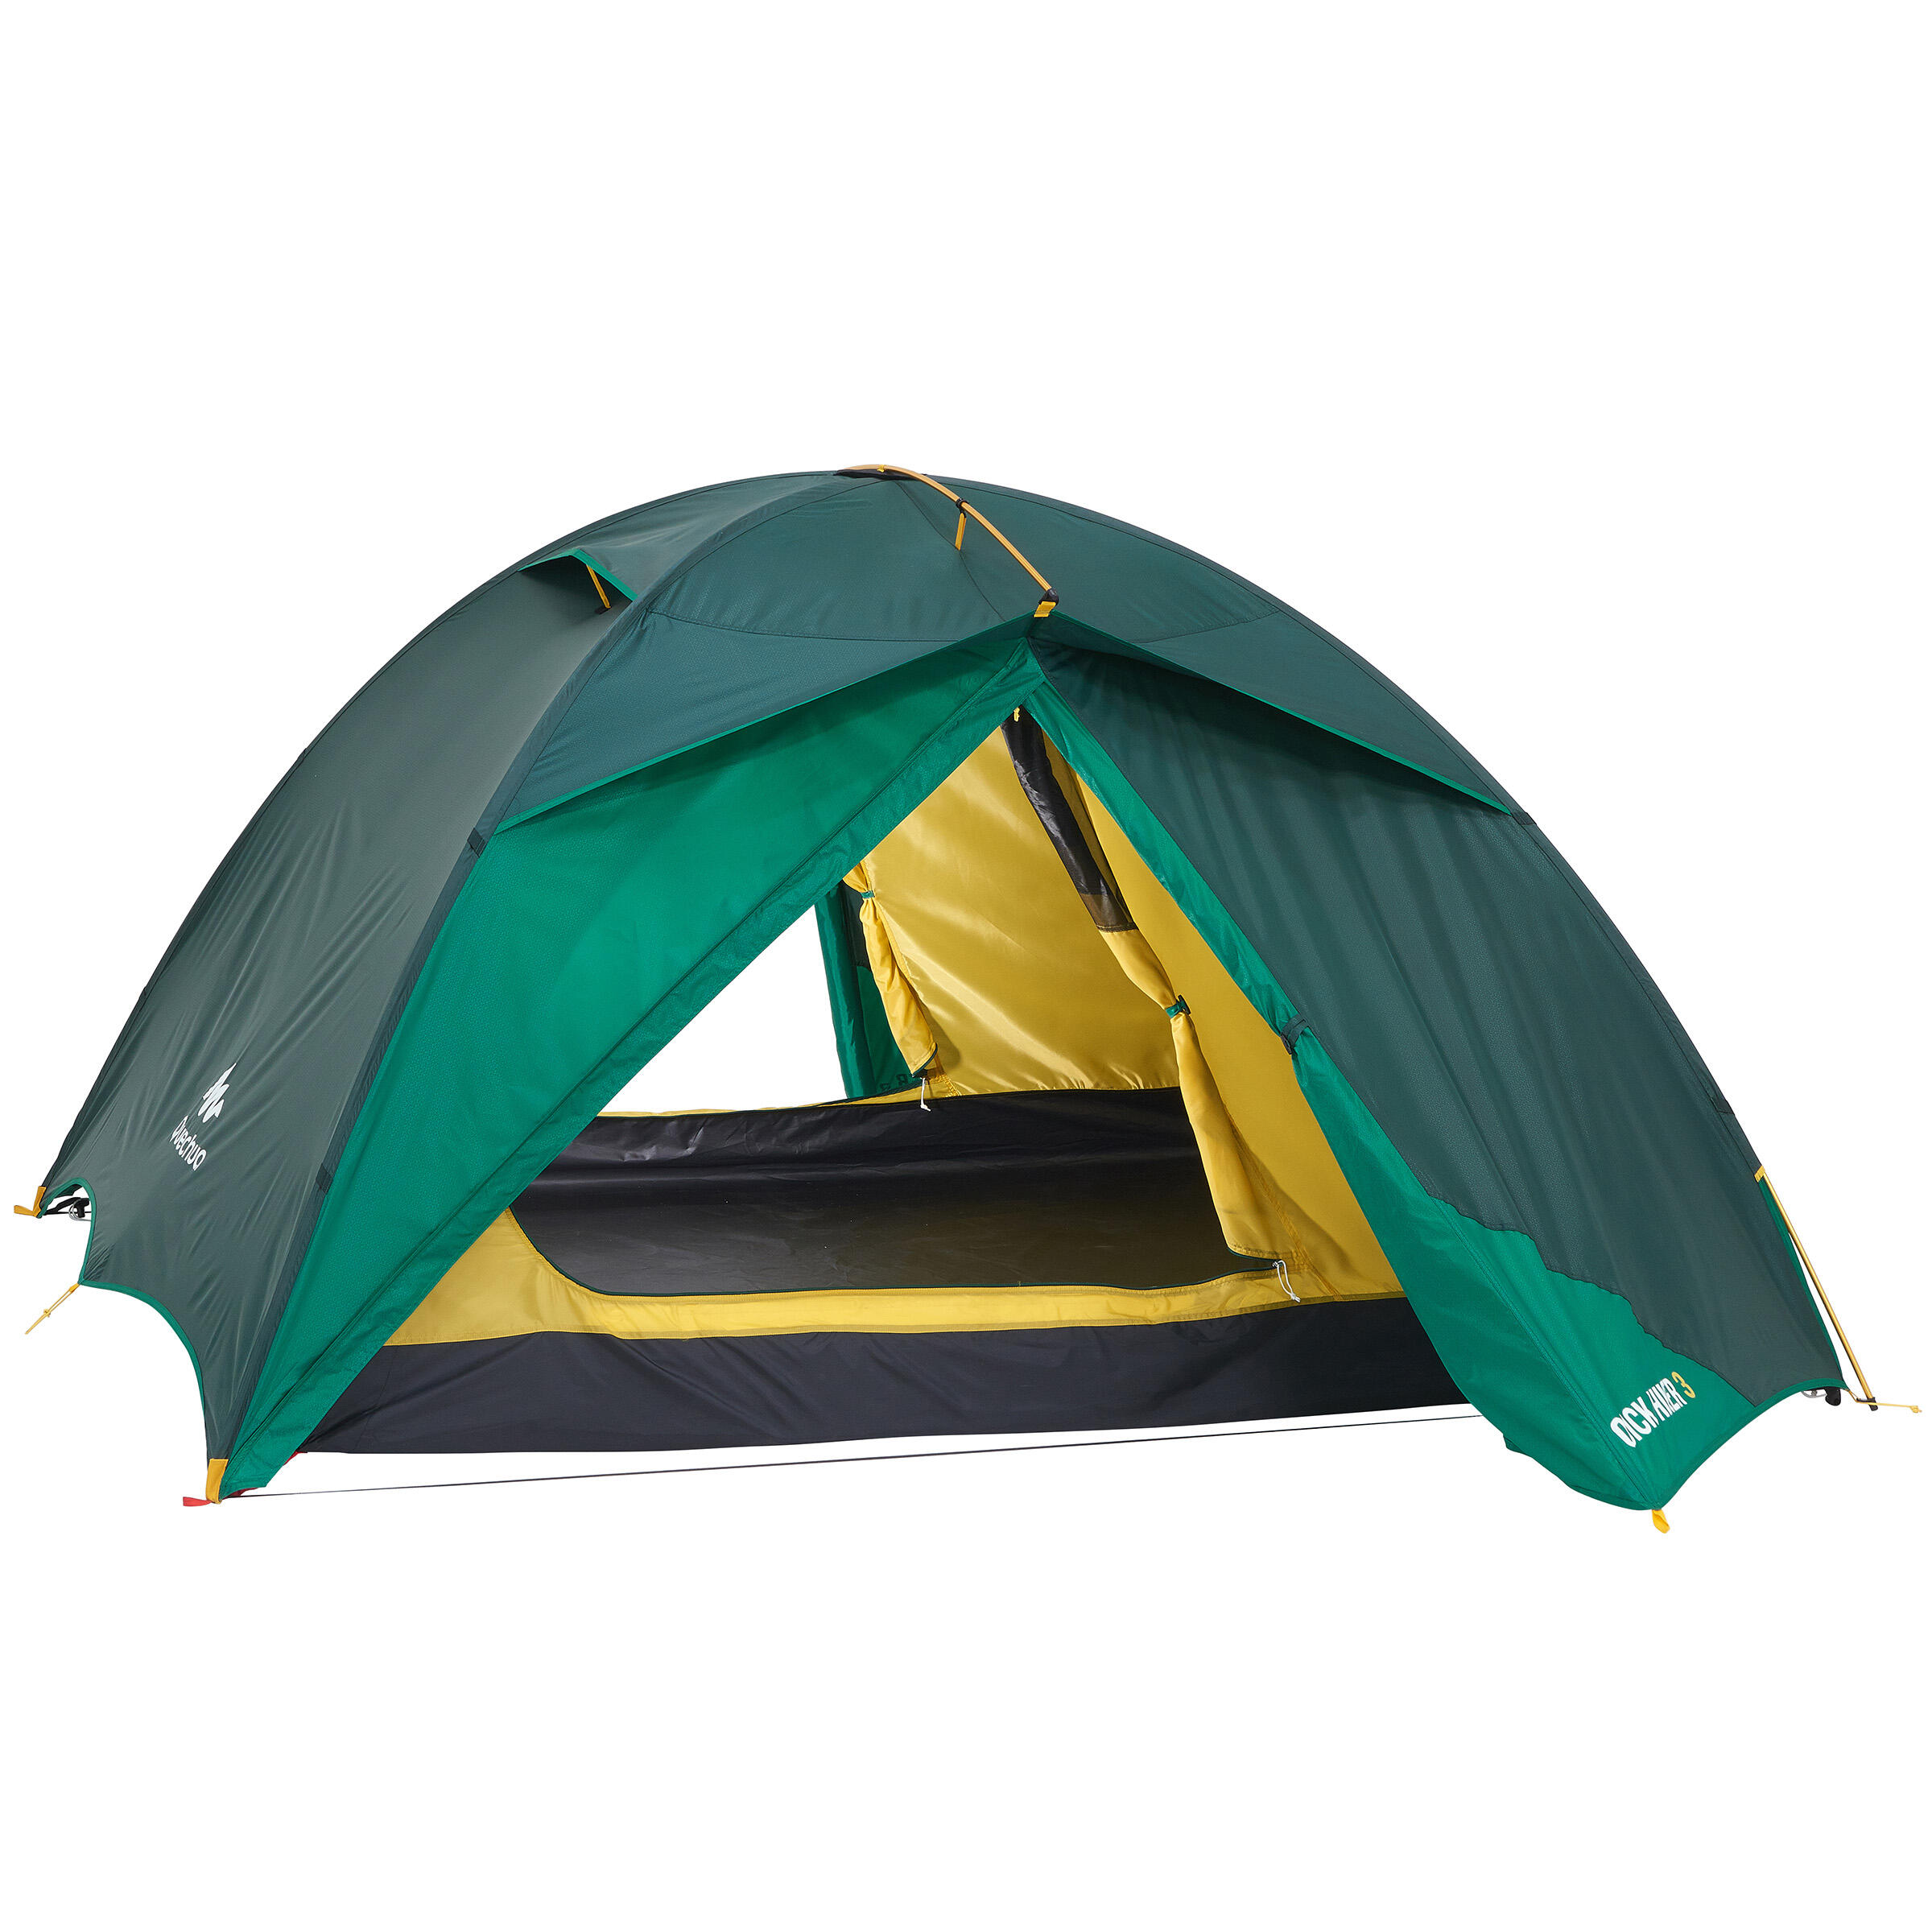 QuickHiker 3 person tent - green